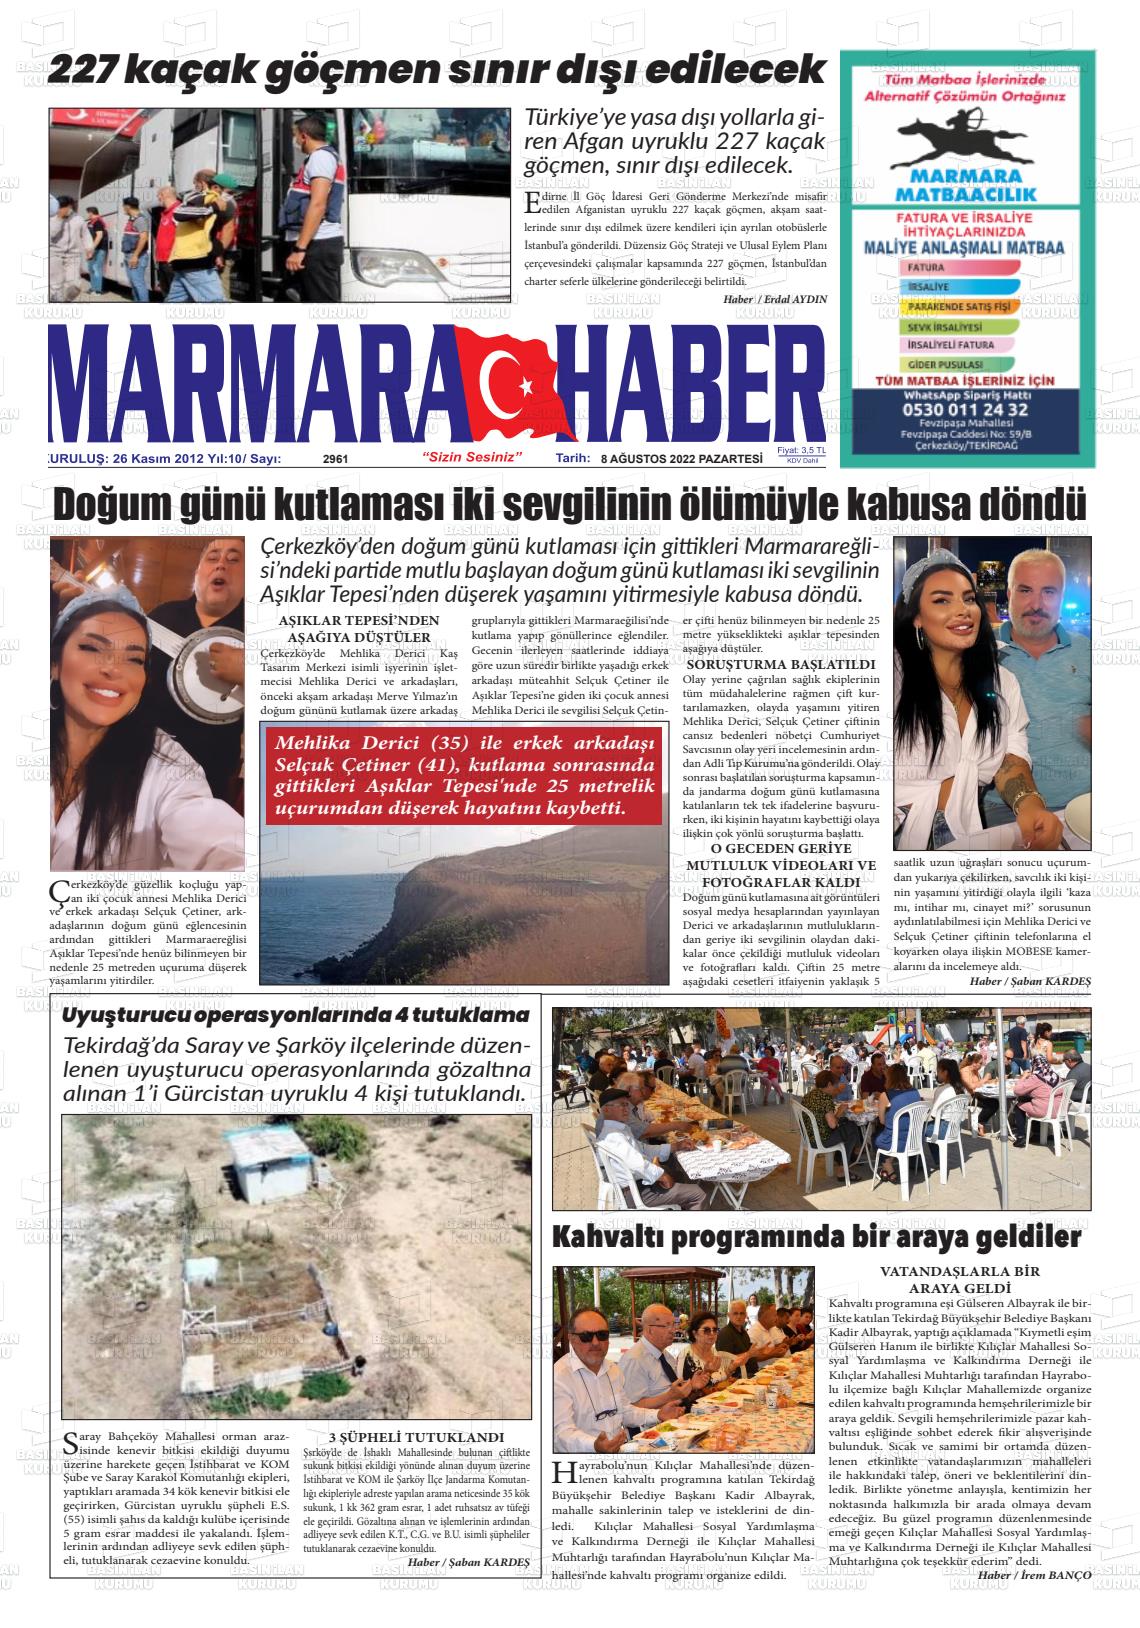 08 Ağustos 2022 Marmara Haber Gazete Manşeti